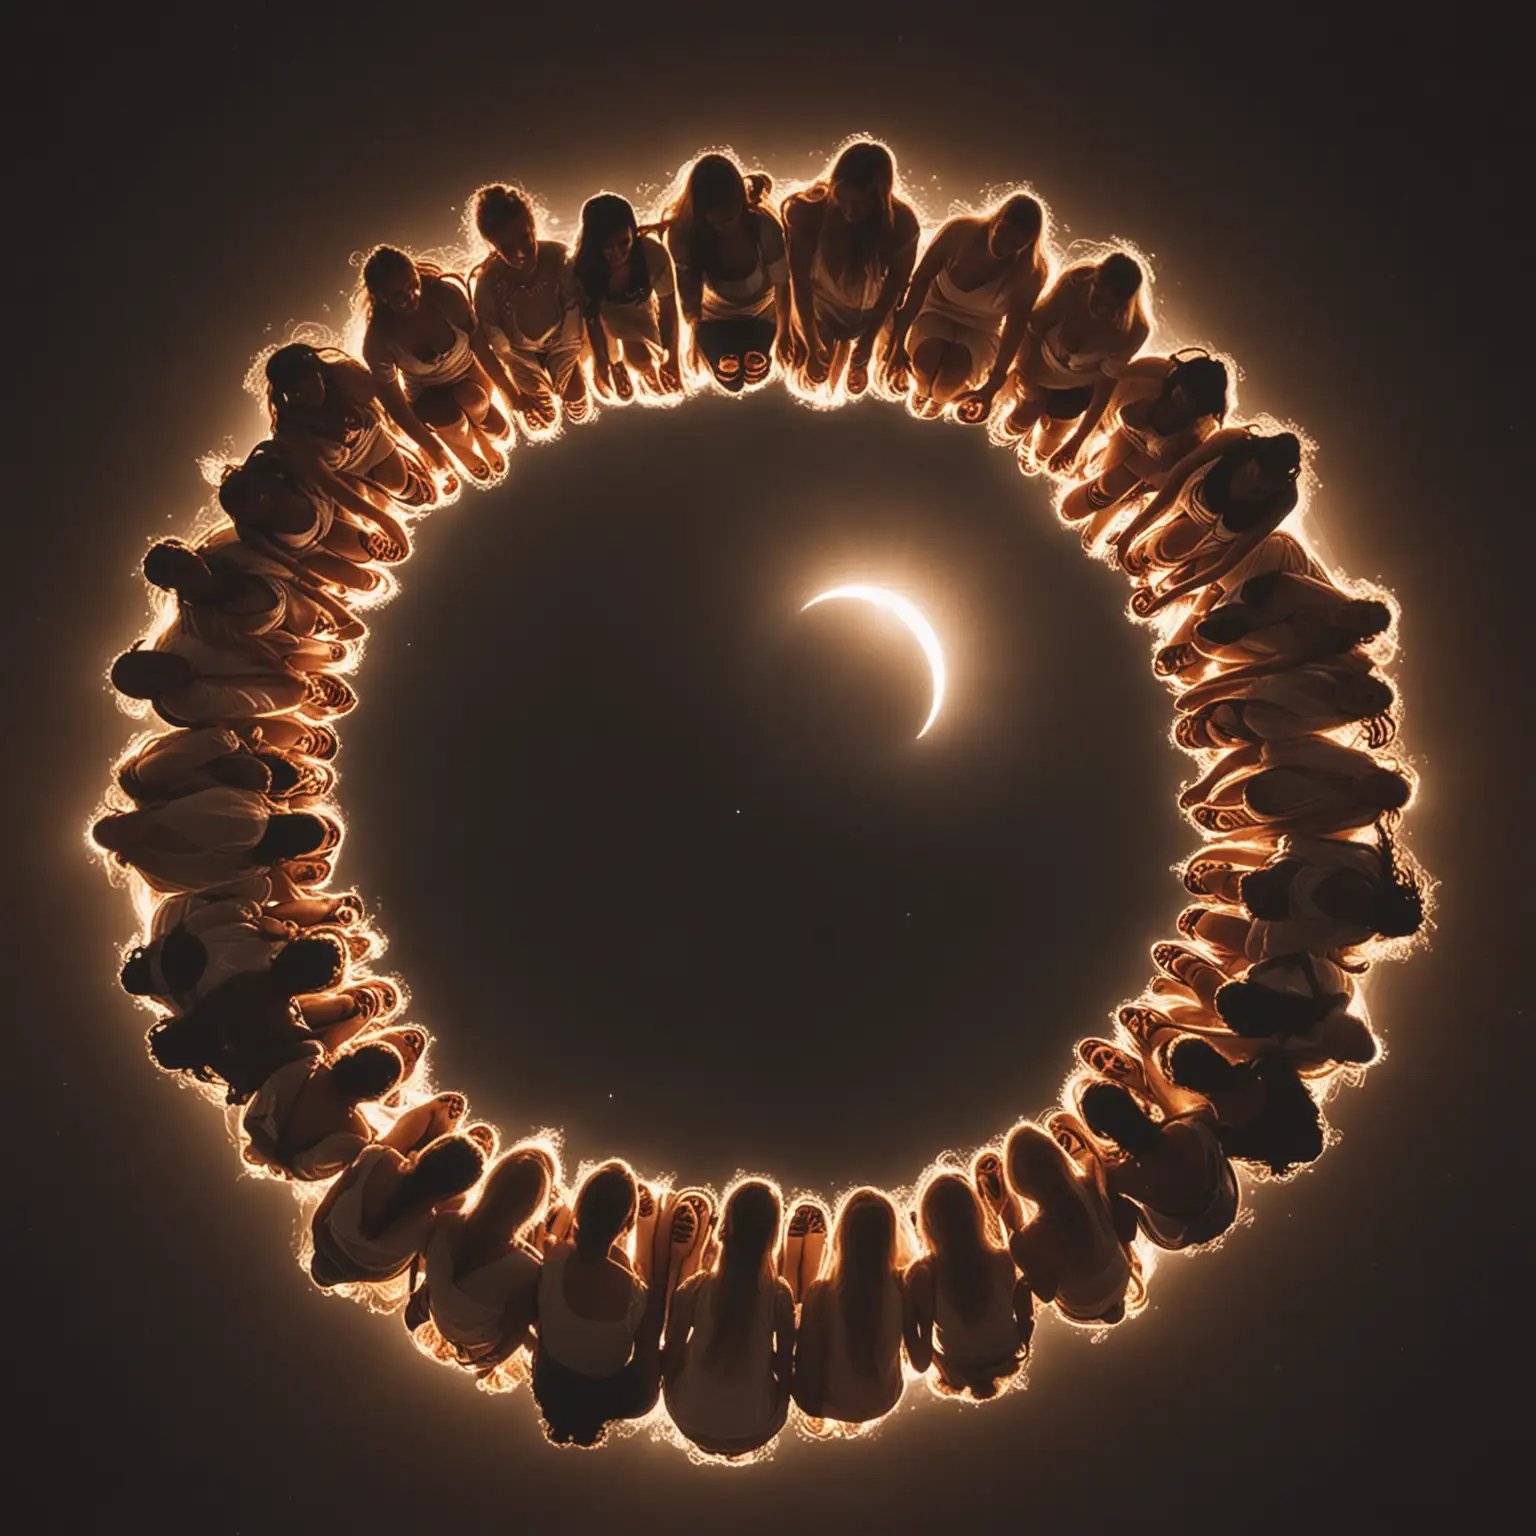 Womens Circle Gathering under Full Solar Eclipse